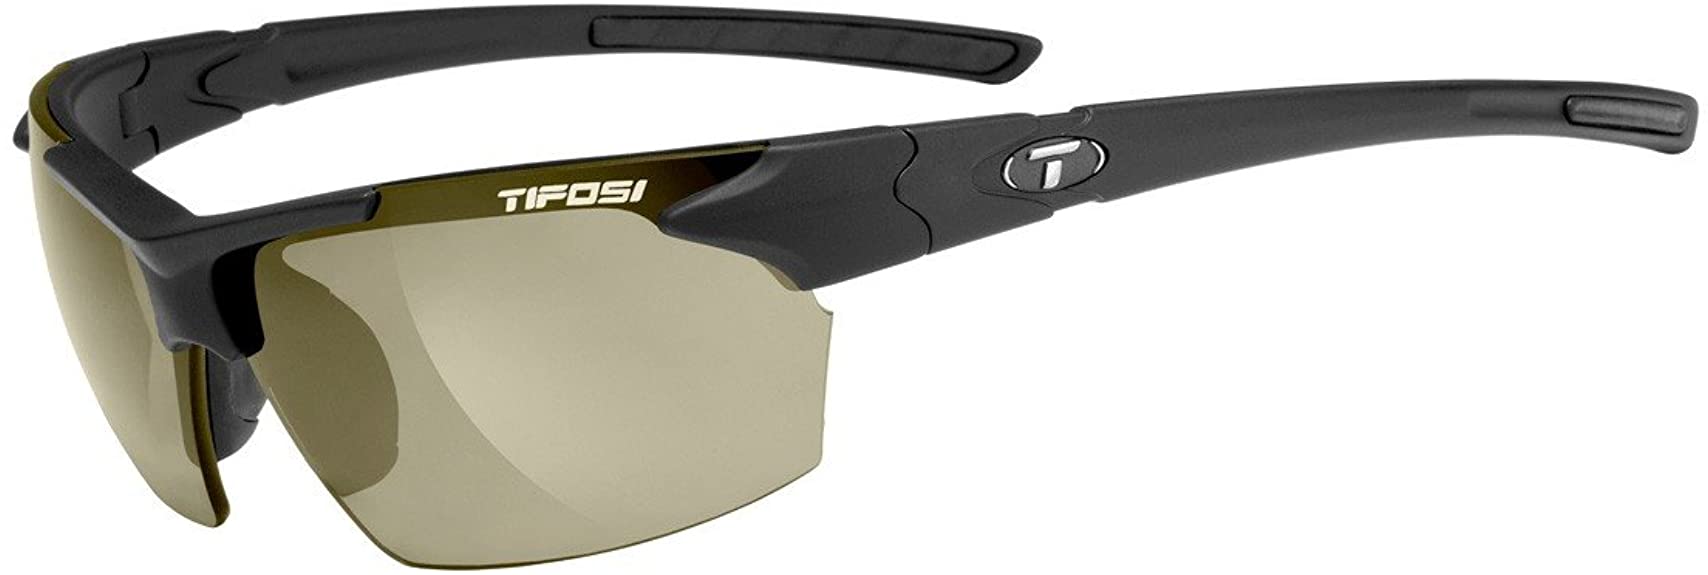 Tifosi Womens Jet Shatterproof Golf Sunglasses